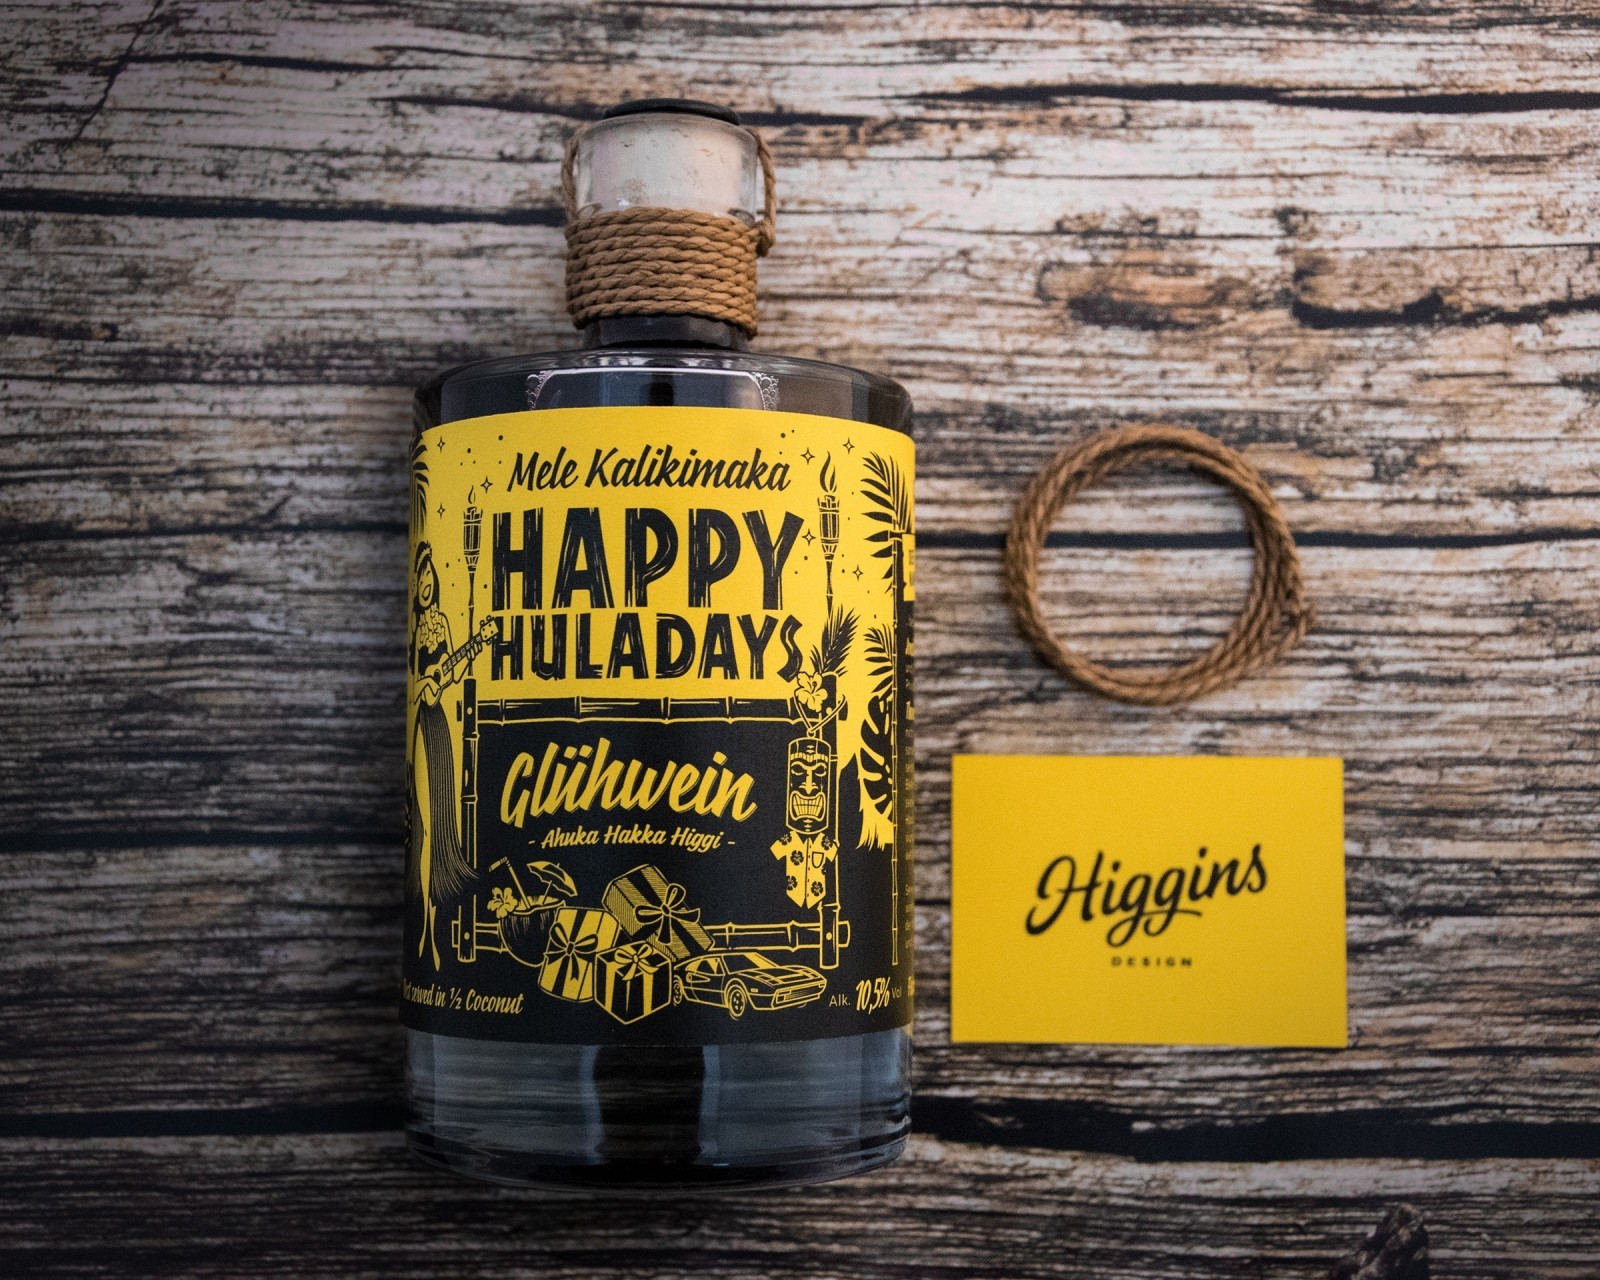 Higgins Design GmbH – “Happy Huladays”